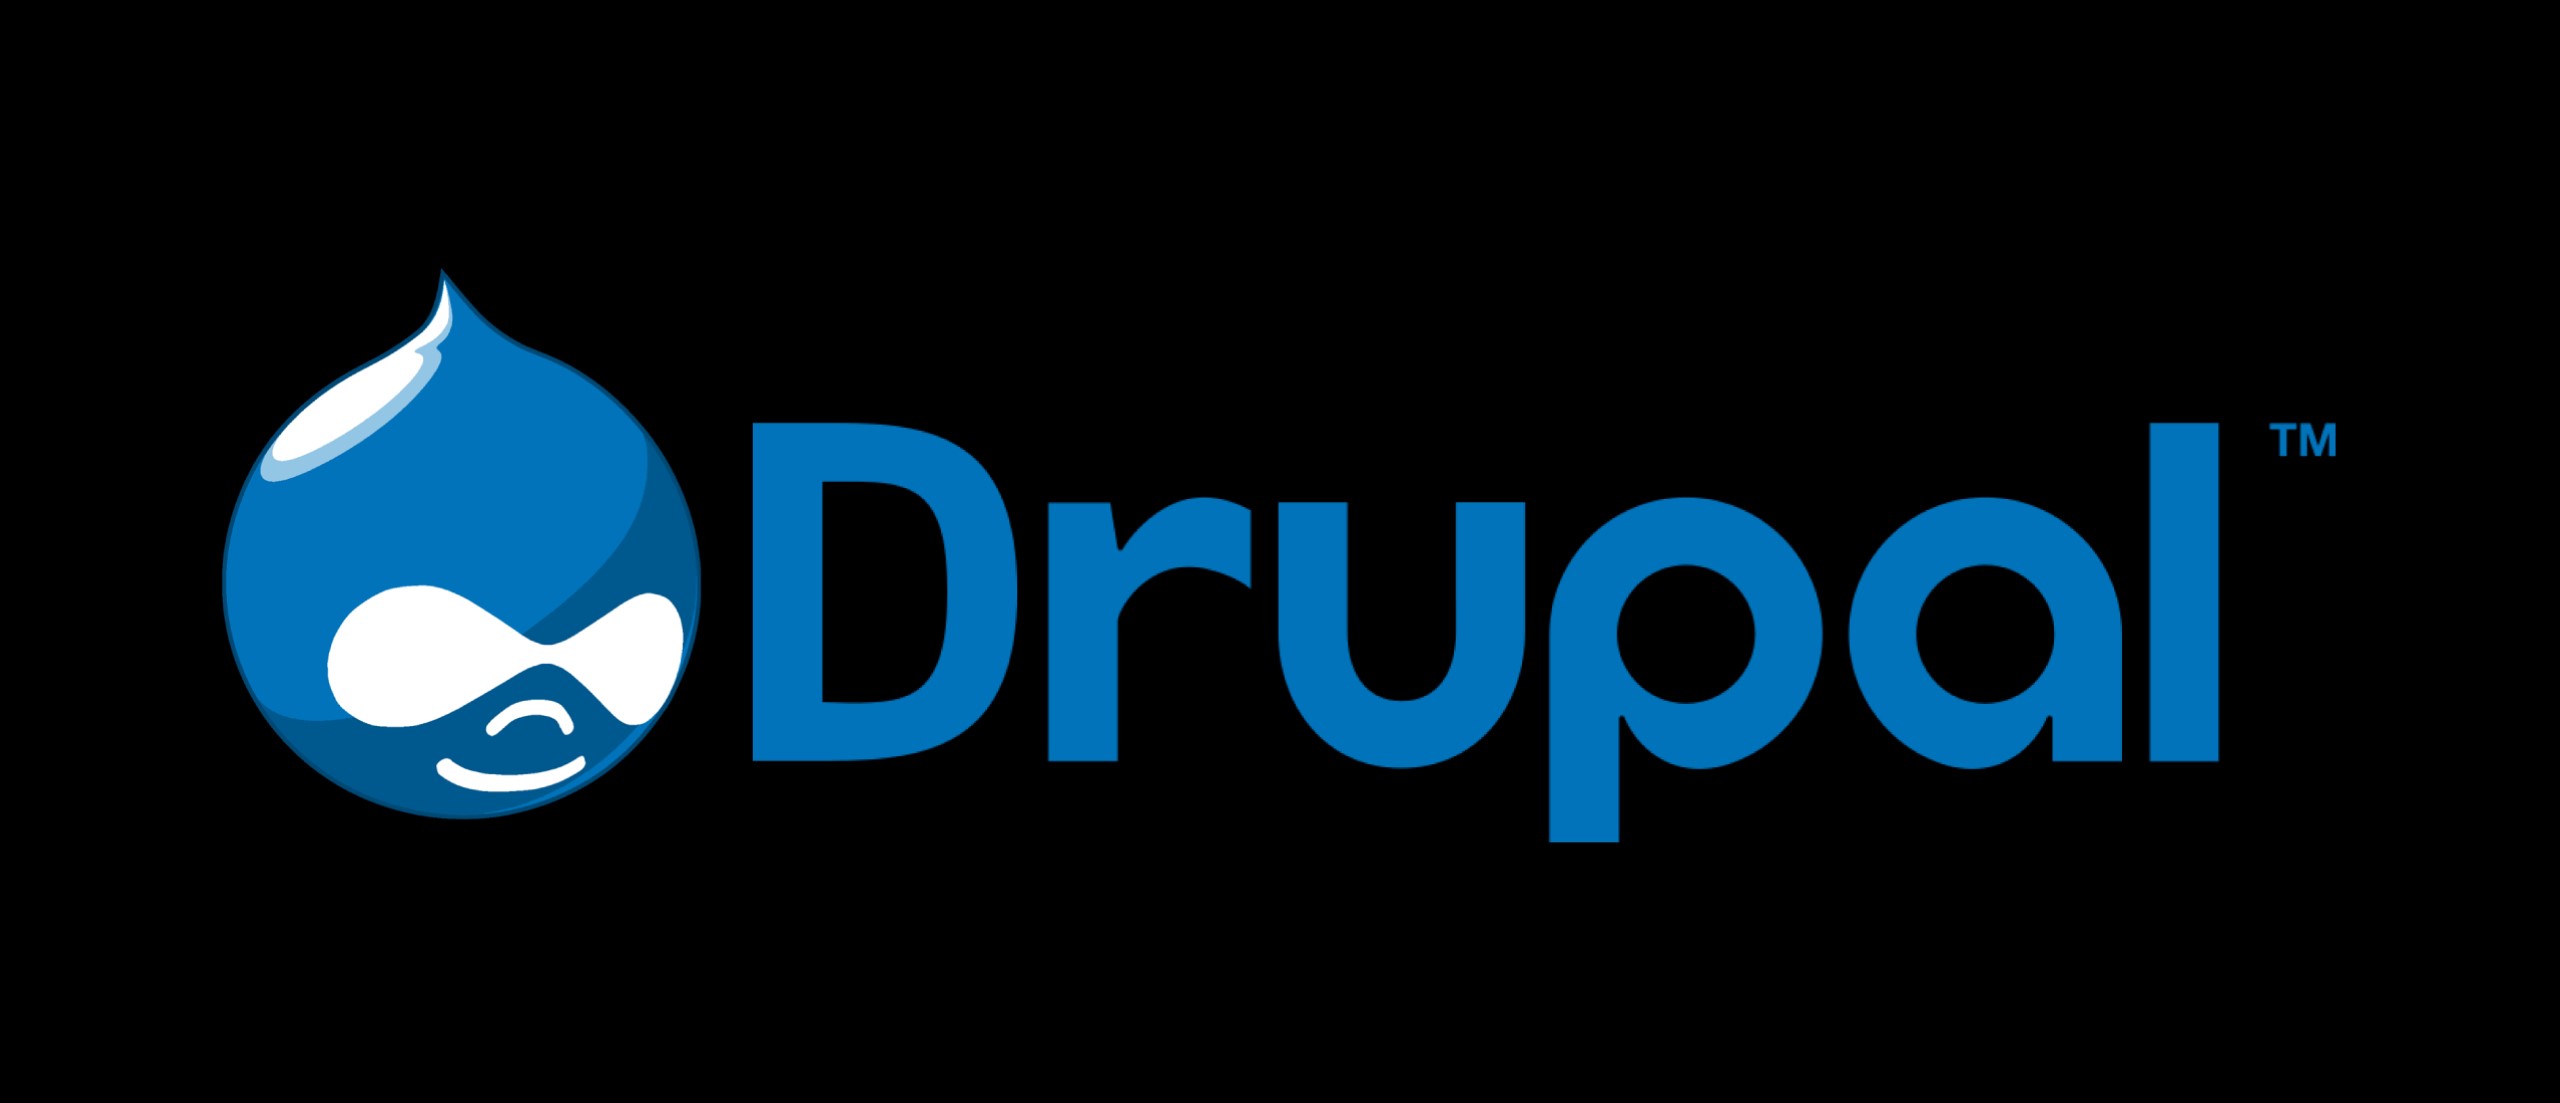 Drupal_logo.jpg